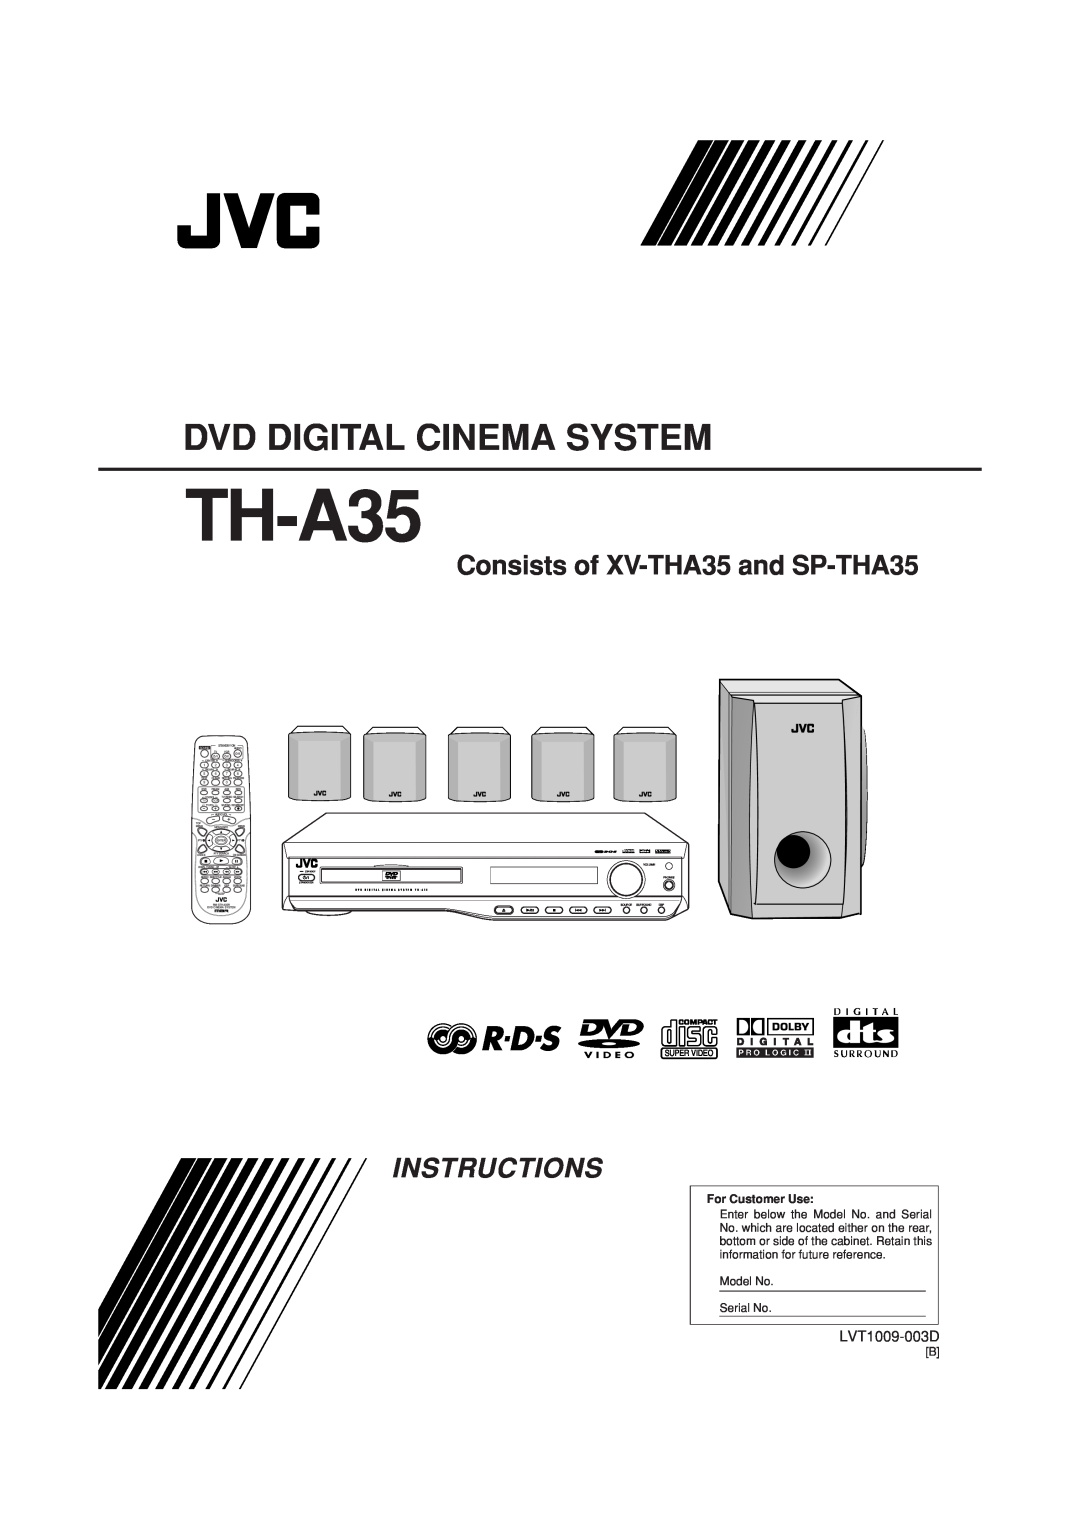 JVC TH-A35 manual Consists of XV-THA35and SP-THA35, LVT1009-003D, Dvd Digital Cinema System, Instructions, Sound 